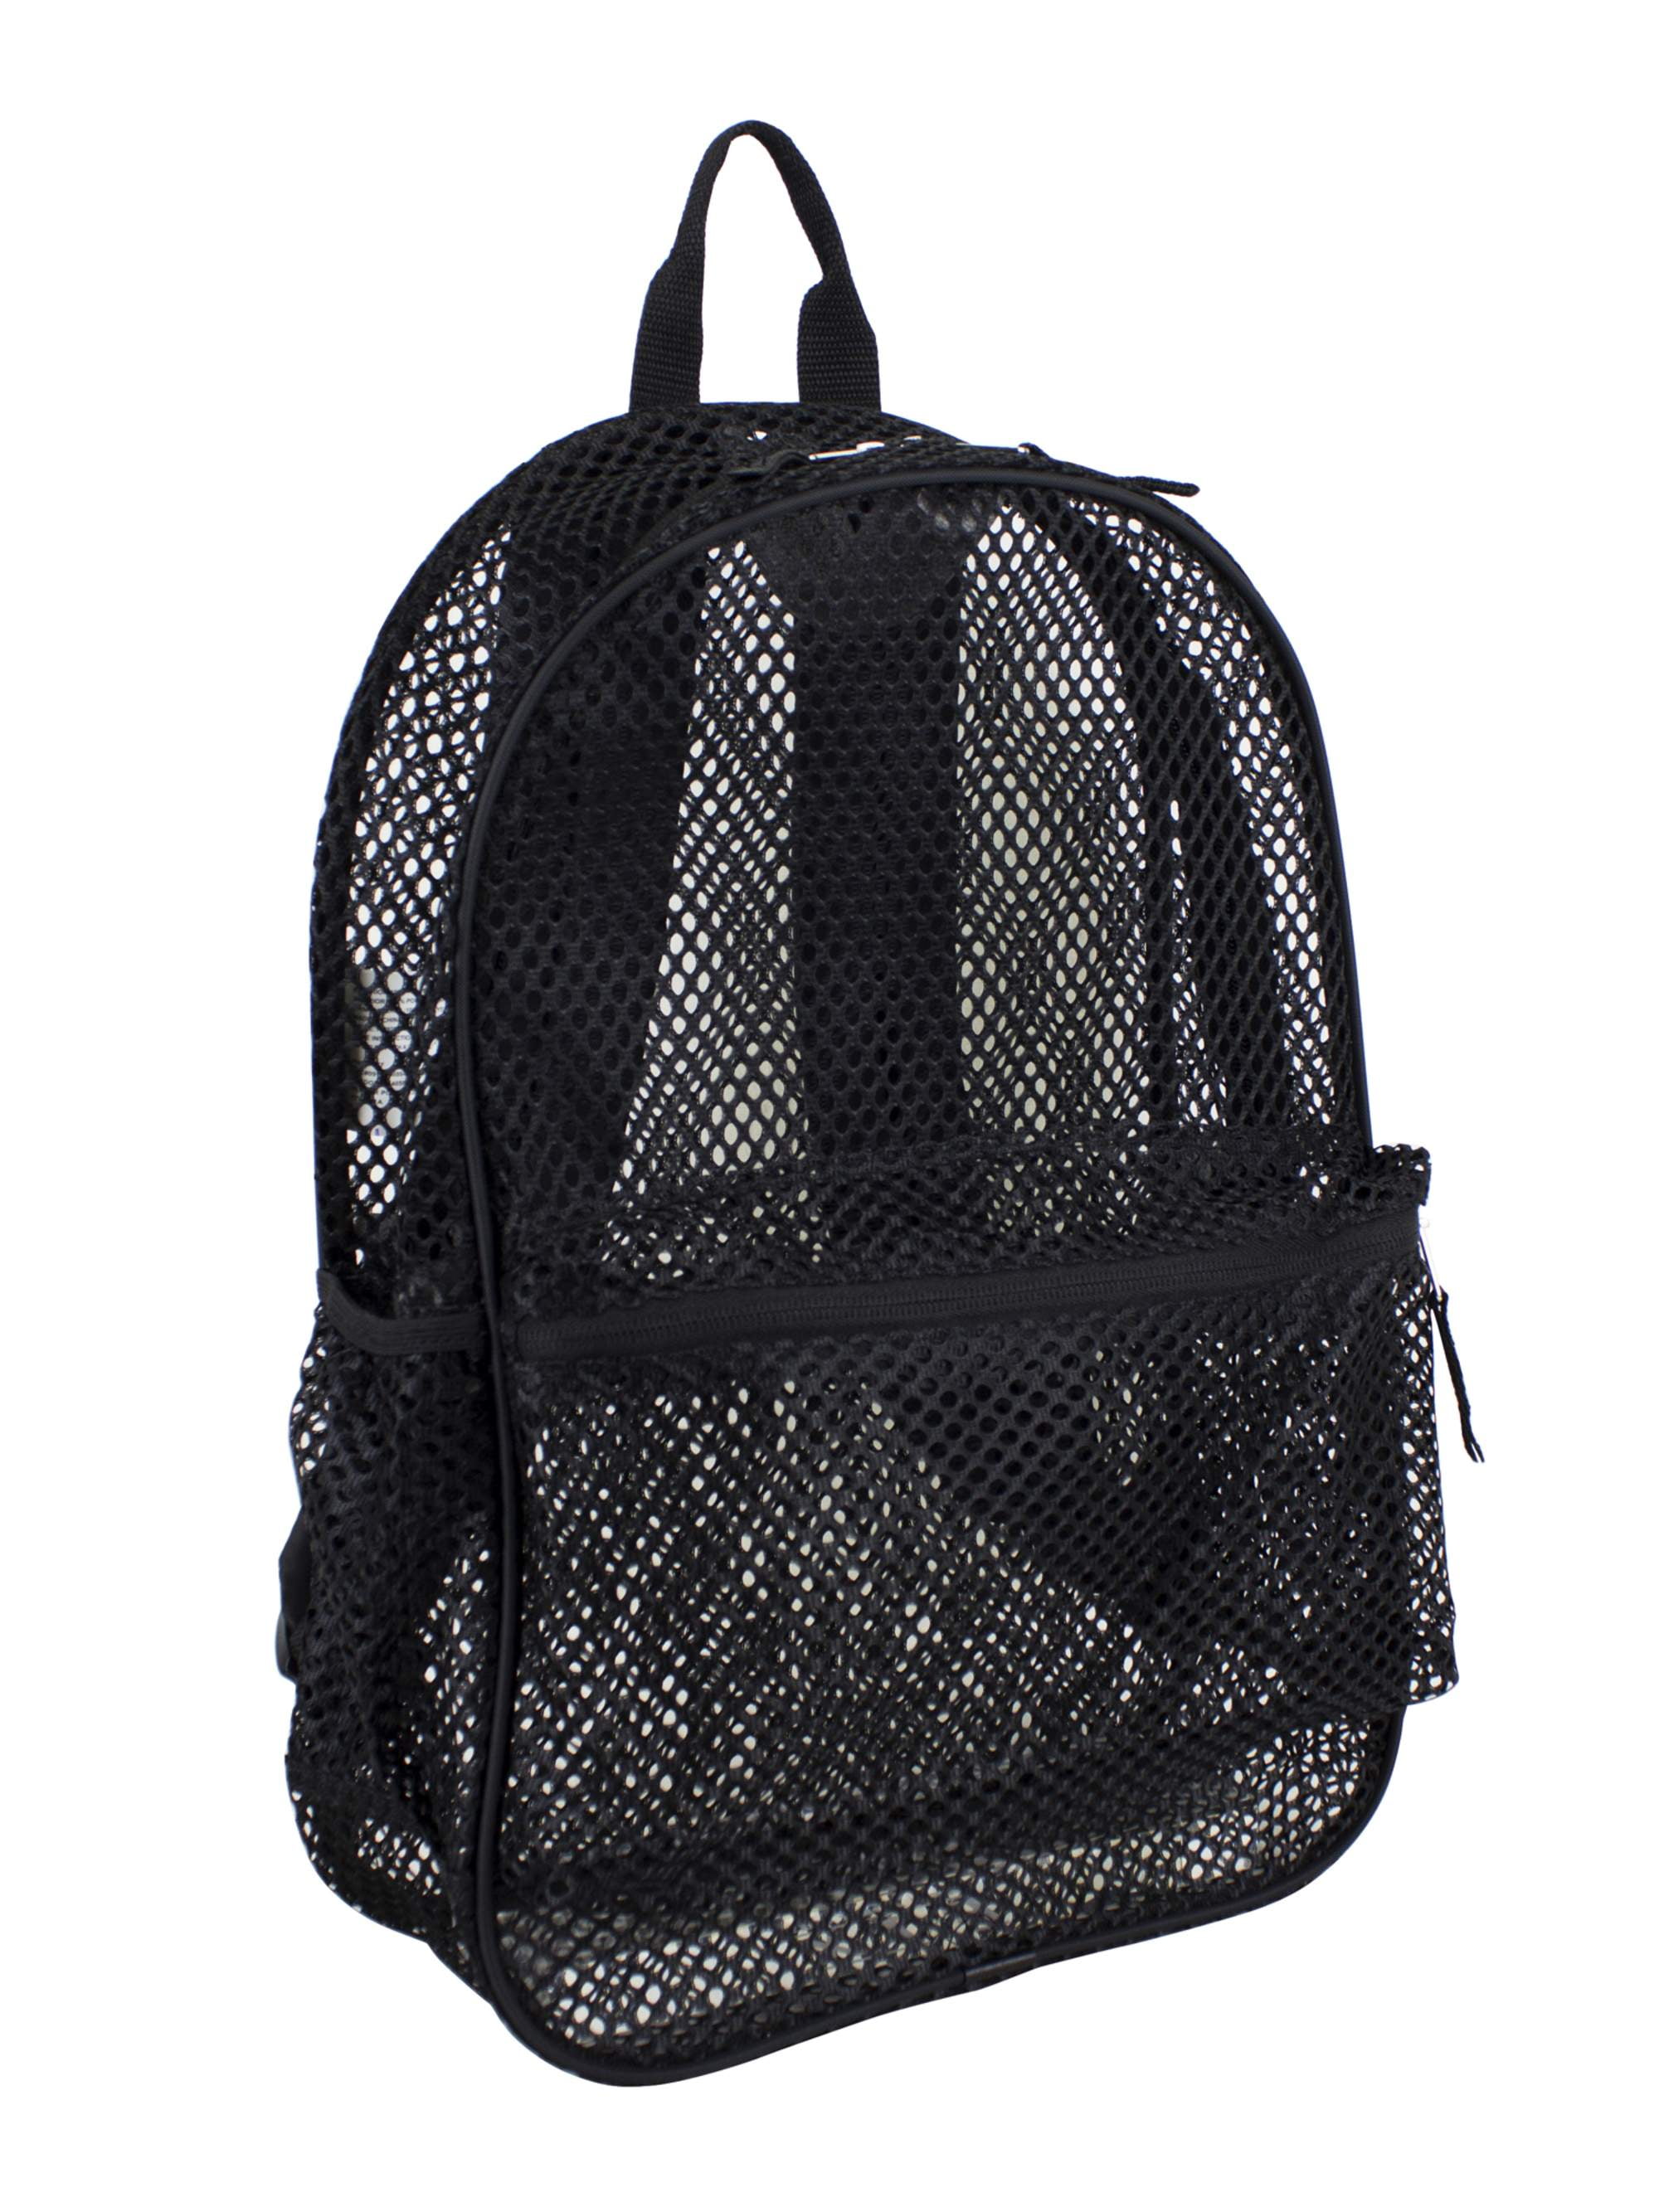 who sells mesh backpacks